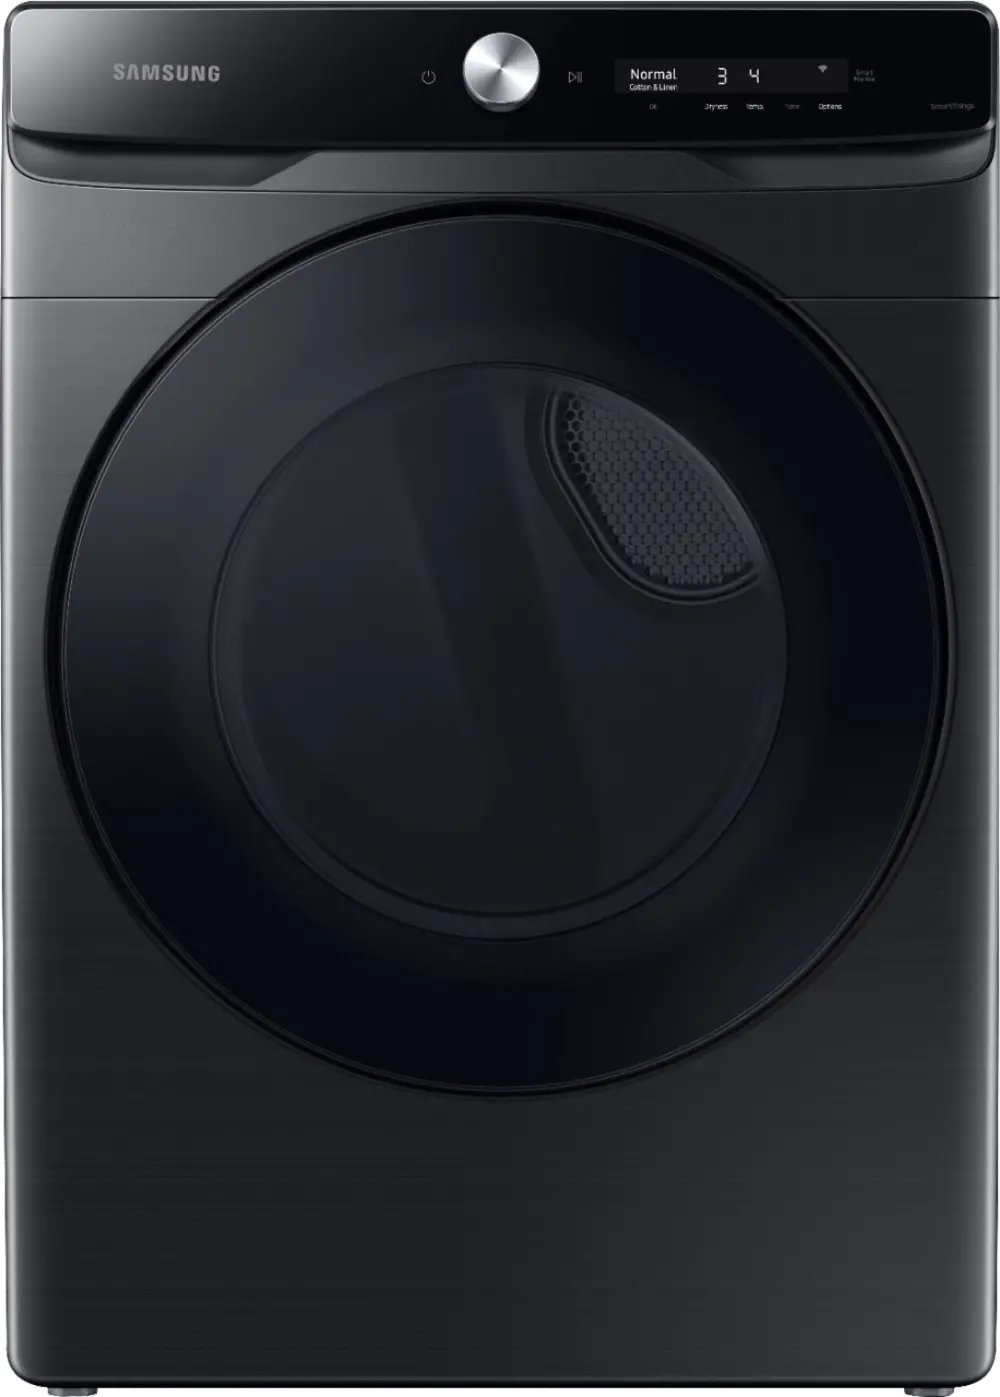 DVG50A8600V Samsung Smart Dial Gas Dryer with Super Speed Dry - Brushed Black 7.5 cu. ft.-1